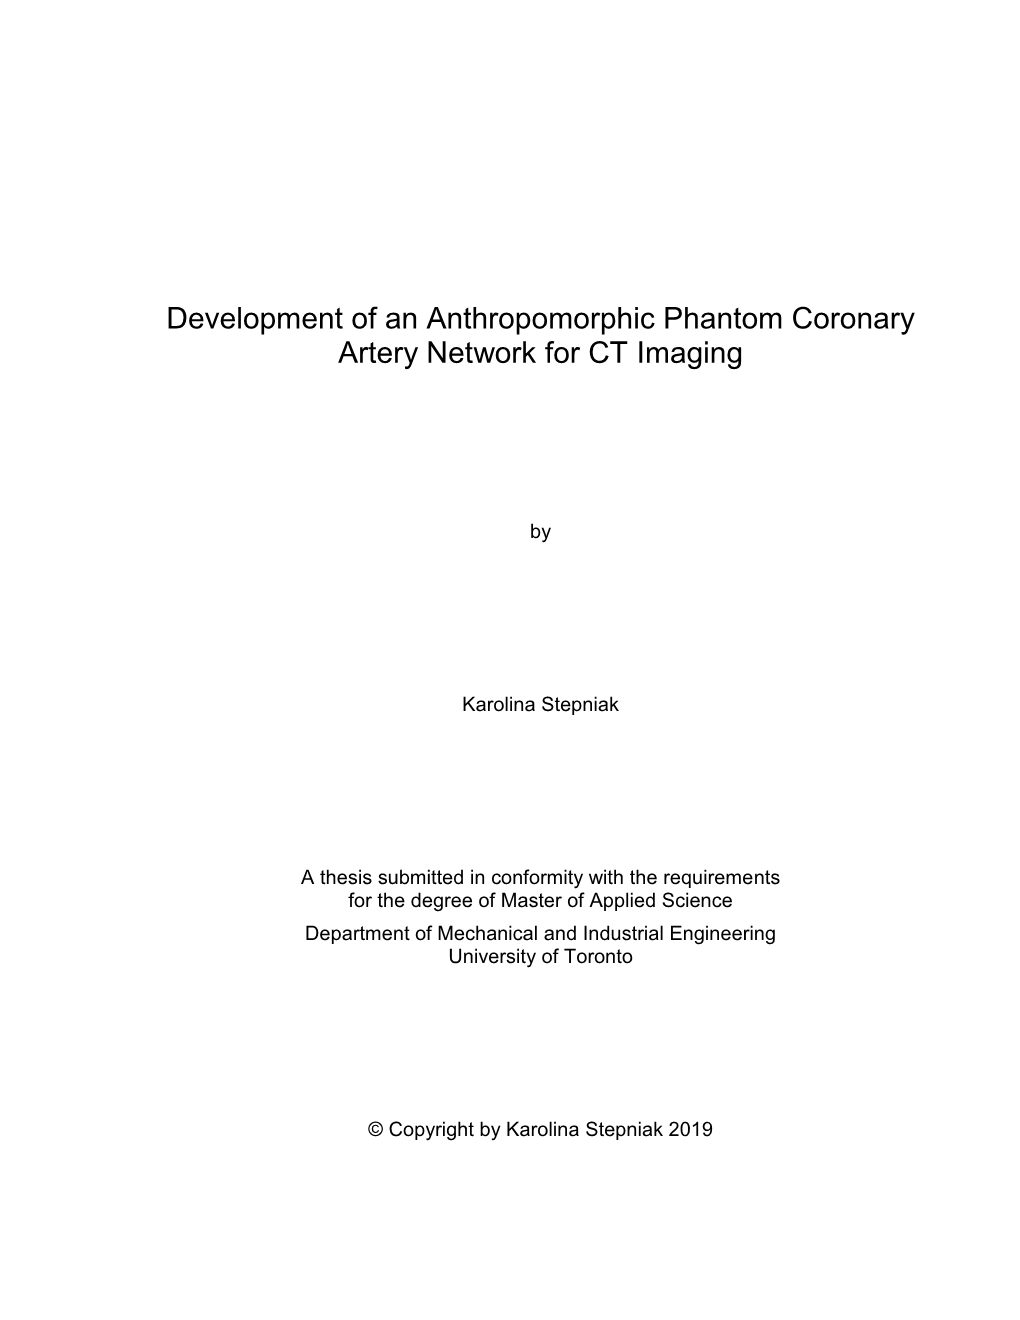 Development of an Anthropomorphic Phantom Coronary Artery Network for CT Imaging